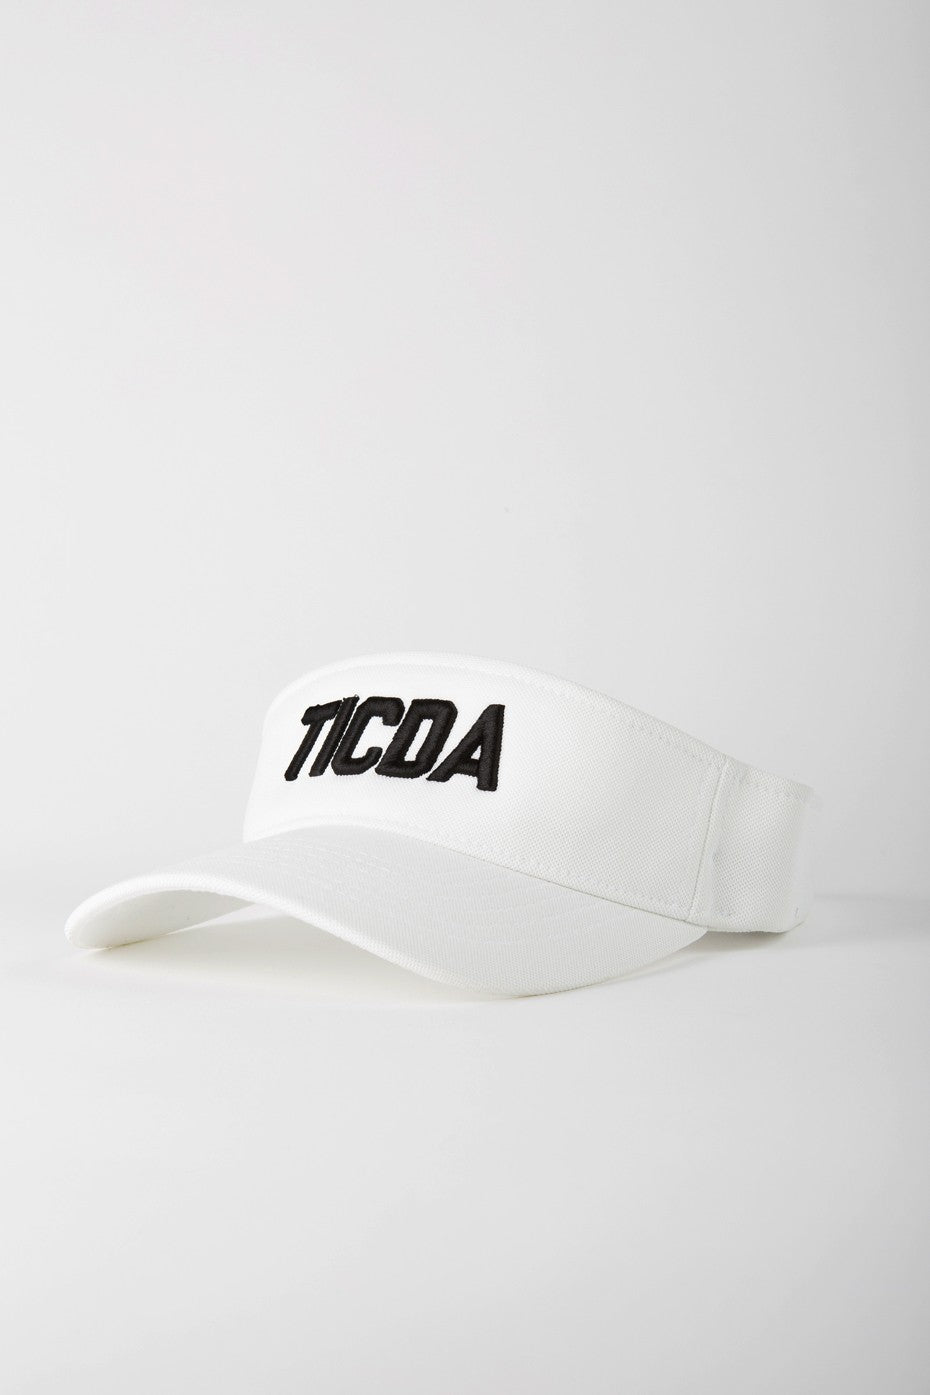 CXDa Fashion Summer Outdoor Sports Sun Protection Cap Unisex Clear Plastic  Visor Hat